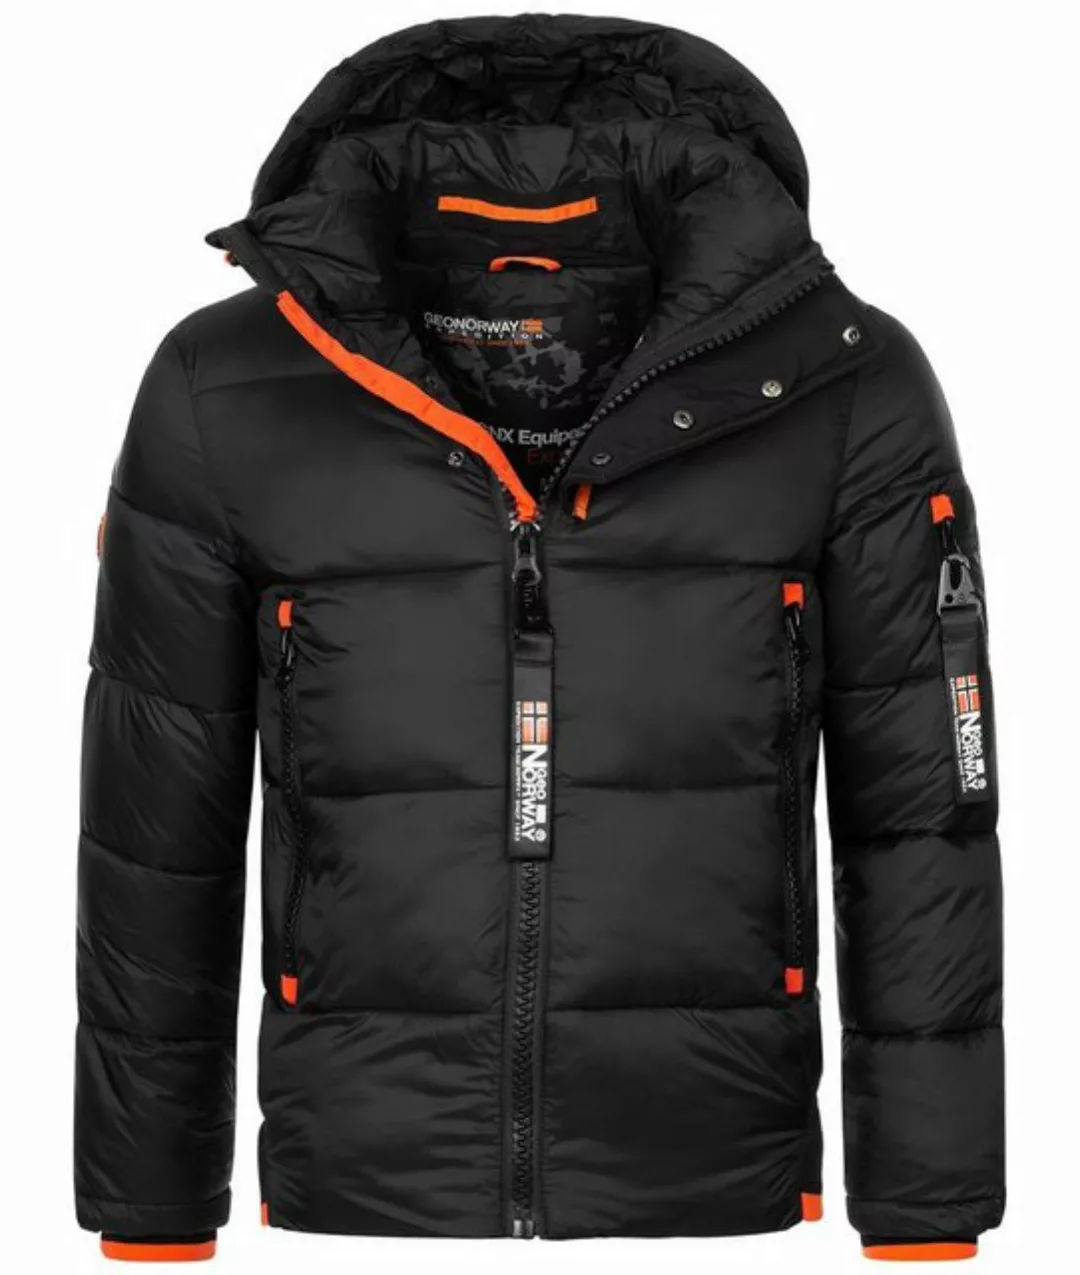 Geo Norway Winterjacke Herren Winter Jacke Steppjacke H-300 günstig online kaufen